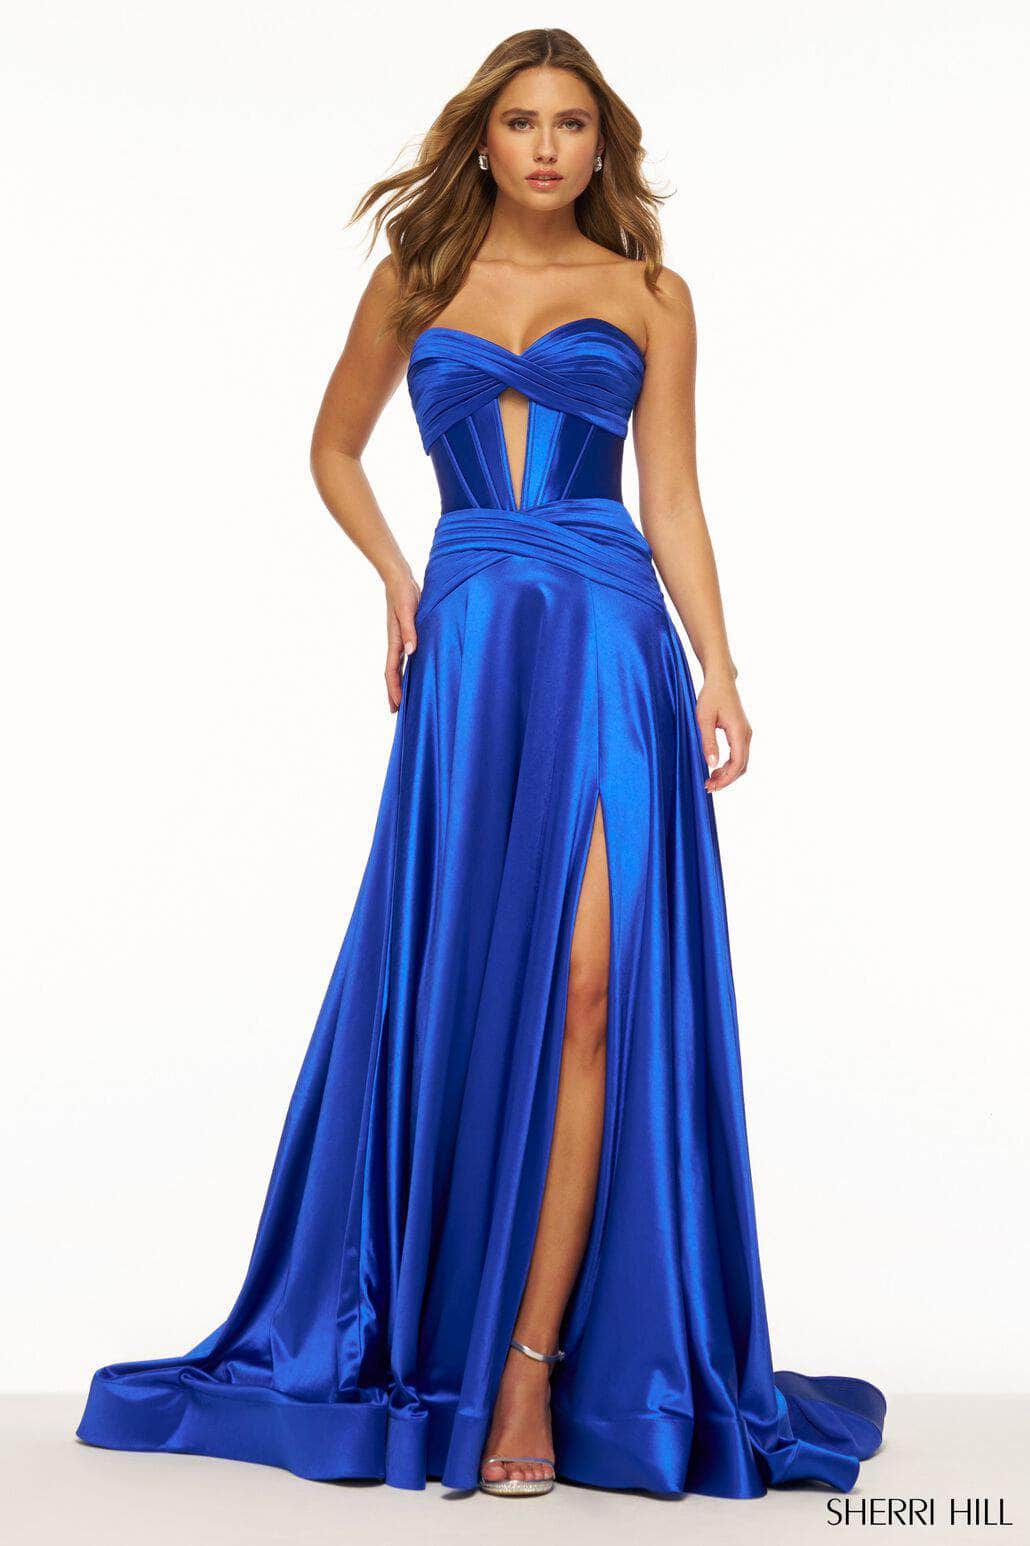 Sherri Hill 56396 - Strapless A-Line Dress Special Occasion Dress